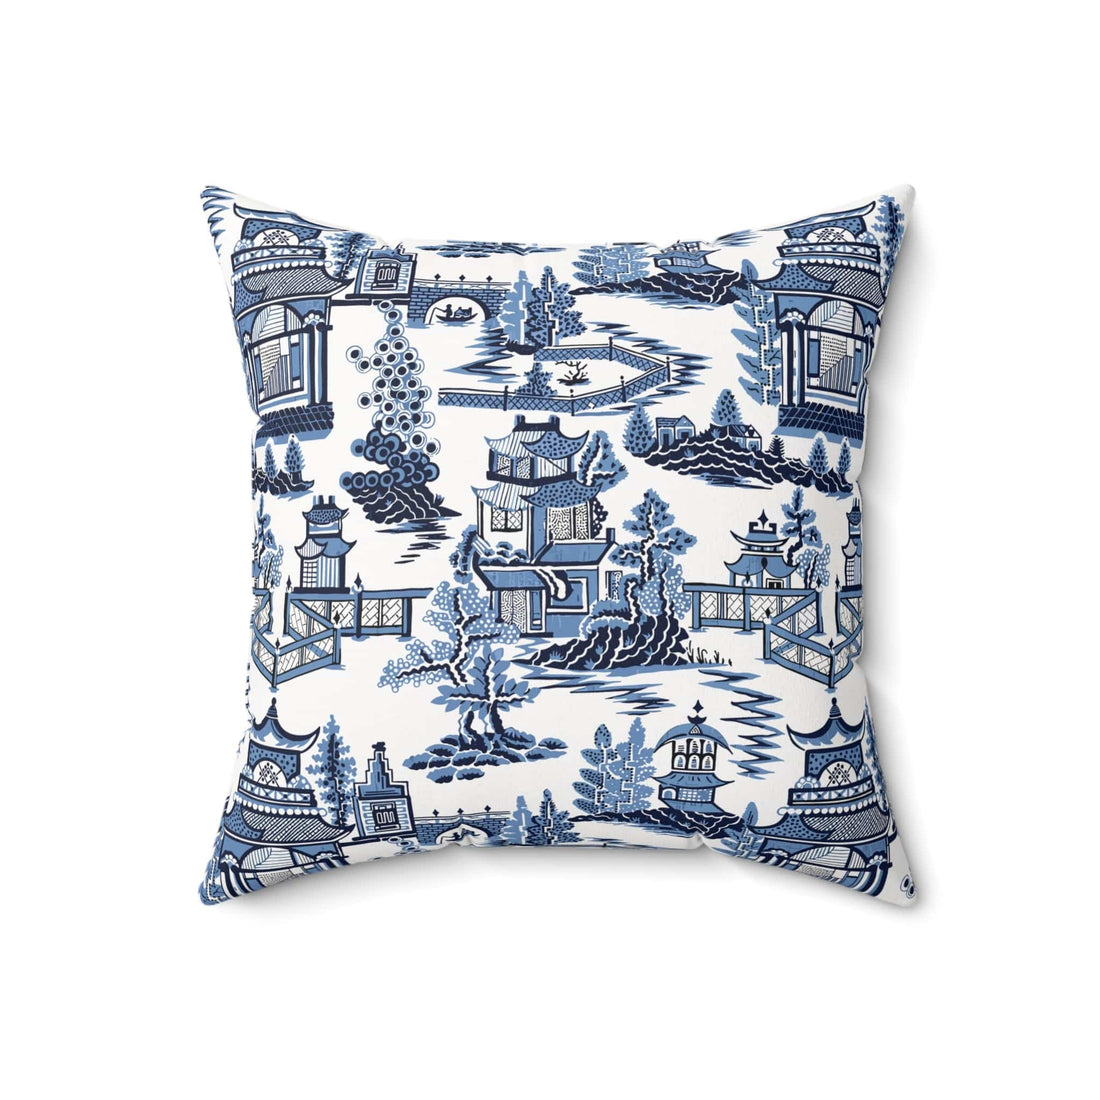 Kate McEnroe New York Chinoiserie Blue Willow Pagoda Throw Pillow, Traditional Blue White Asian Scene CushionsThrow Pillows32609981021871205436